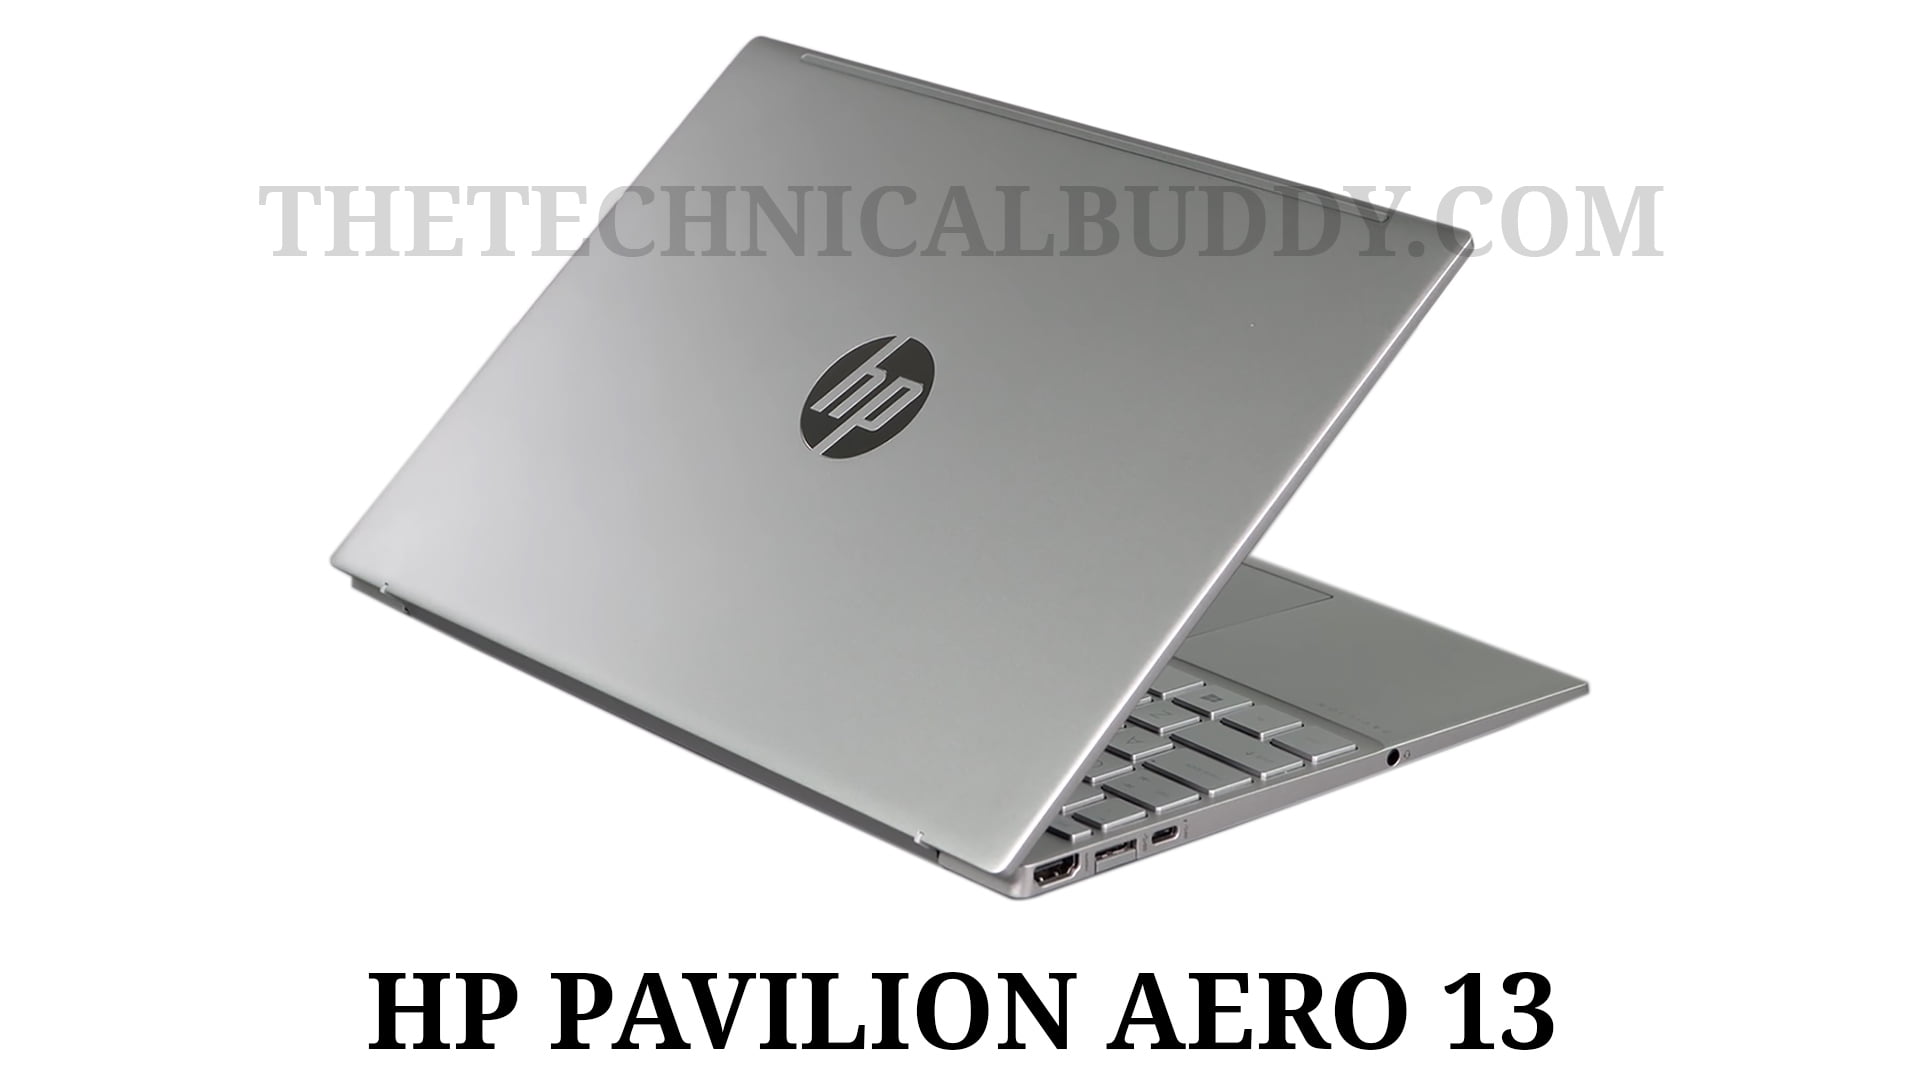 HP Pavilion Aero 13 Review